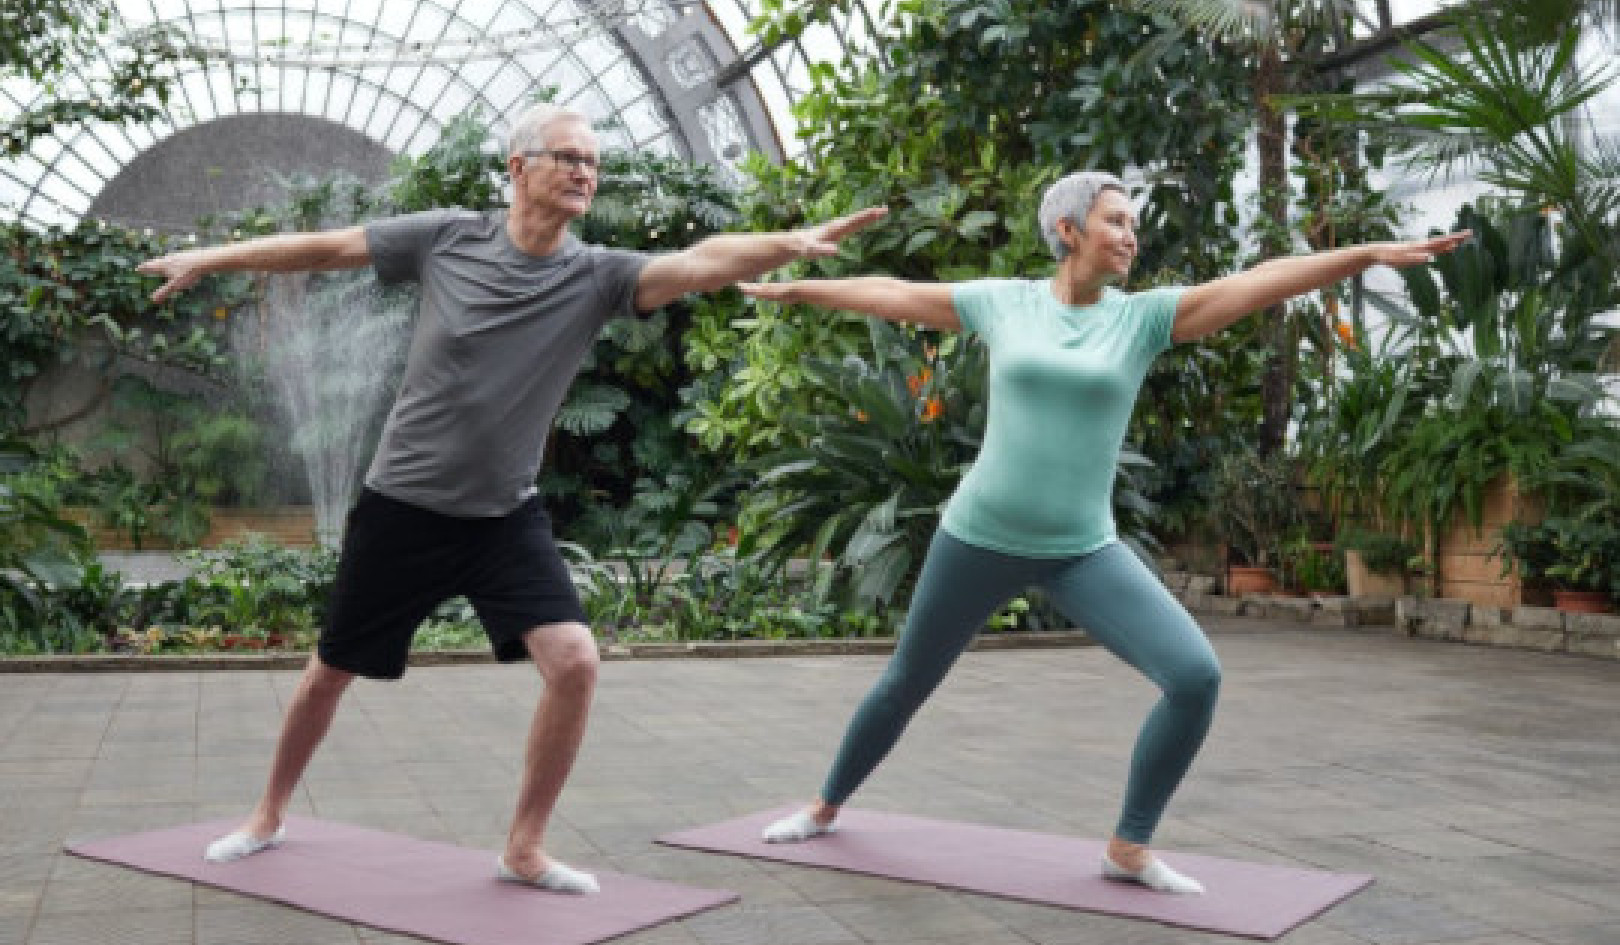 How To Live A Longer, Healthier Life